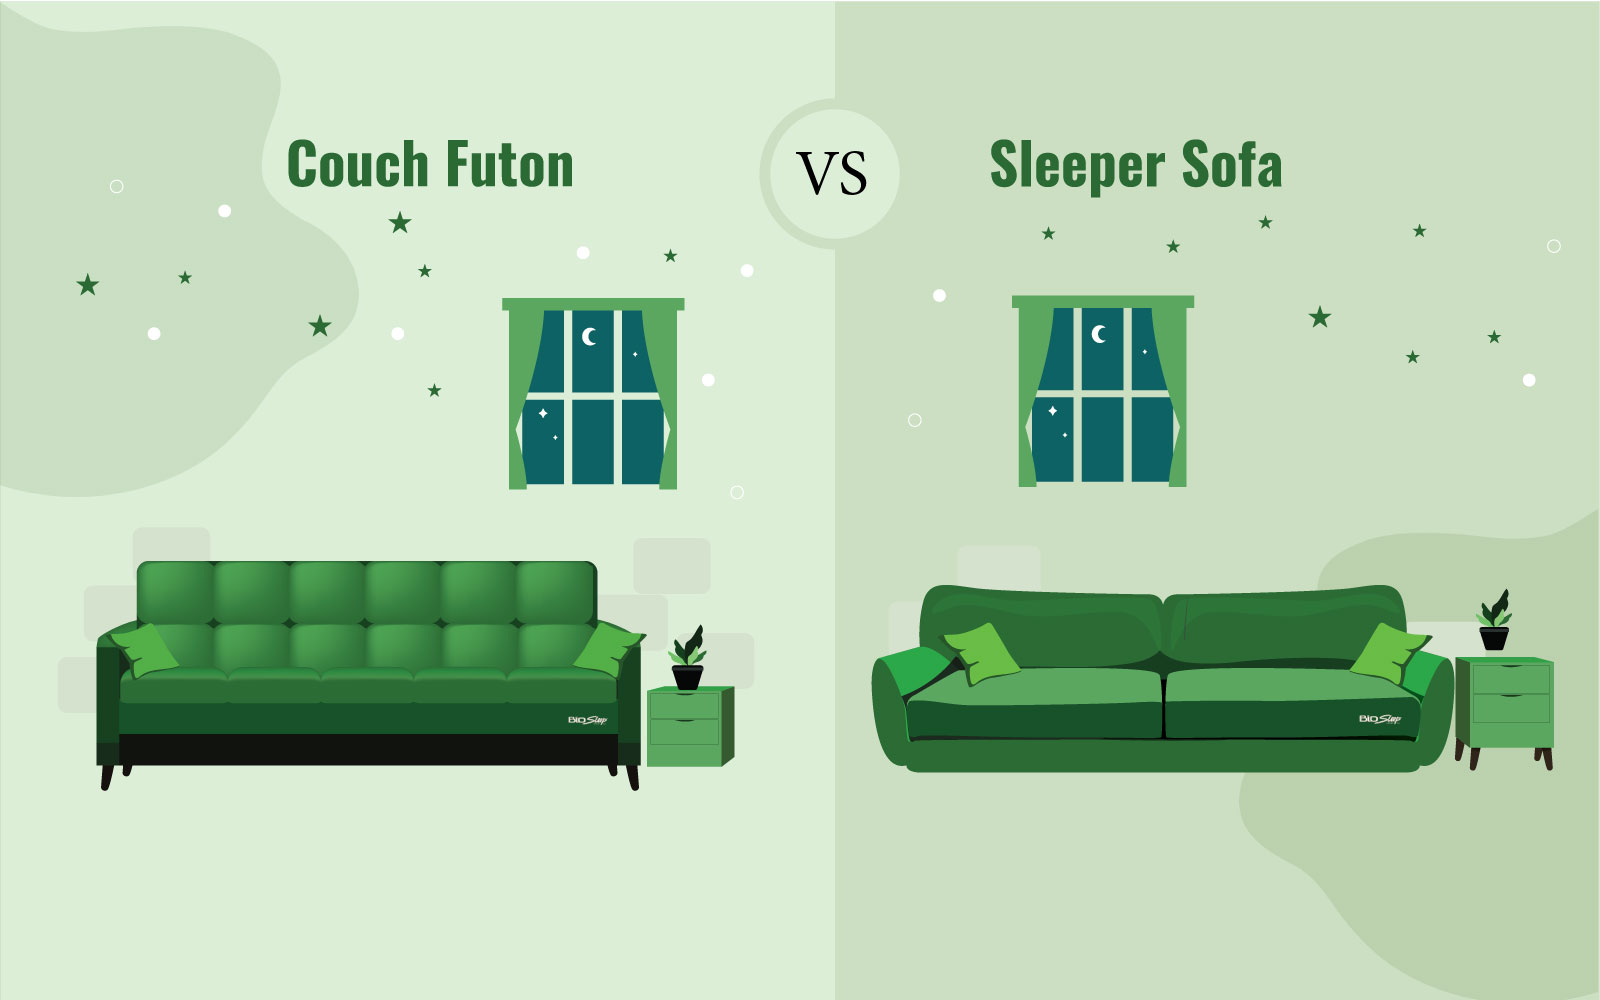 Couch Futon vs Sleeper Sofa